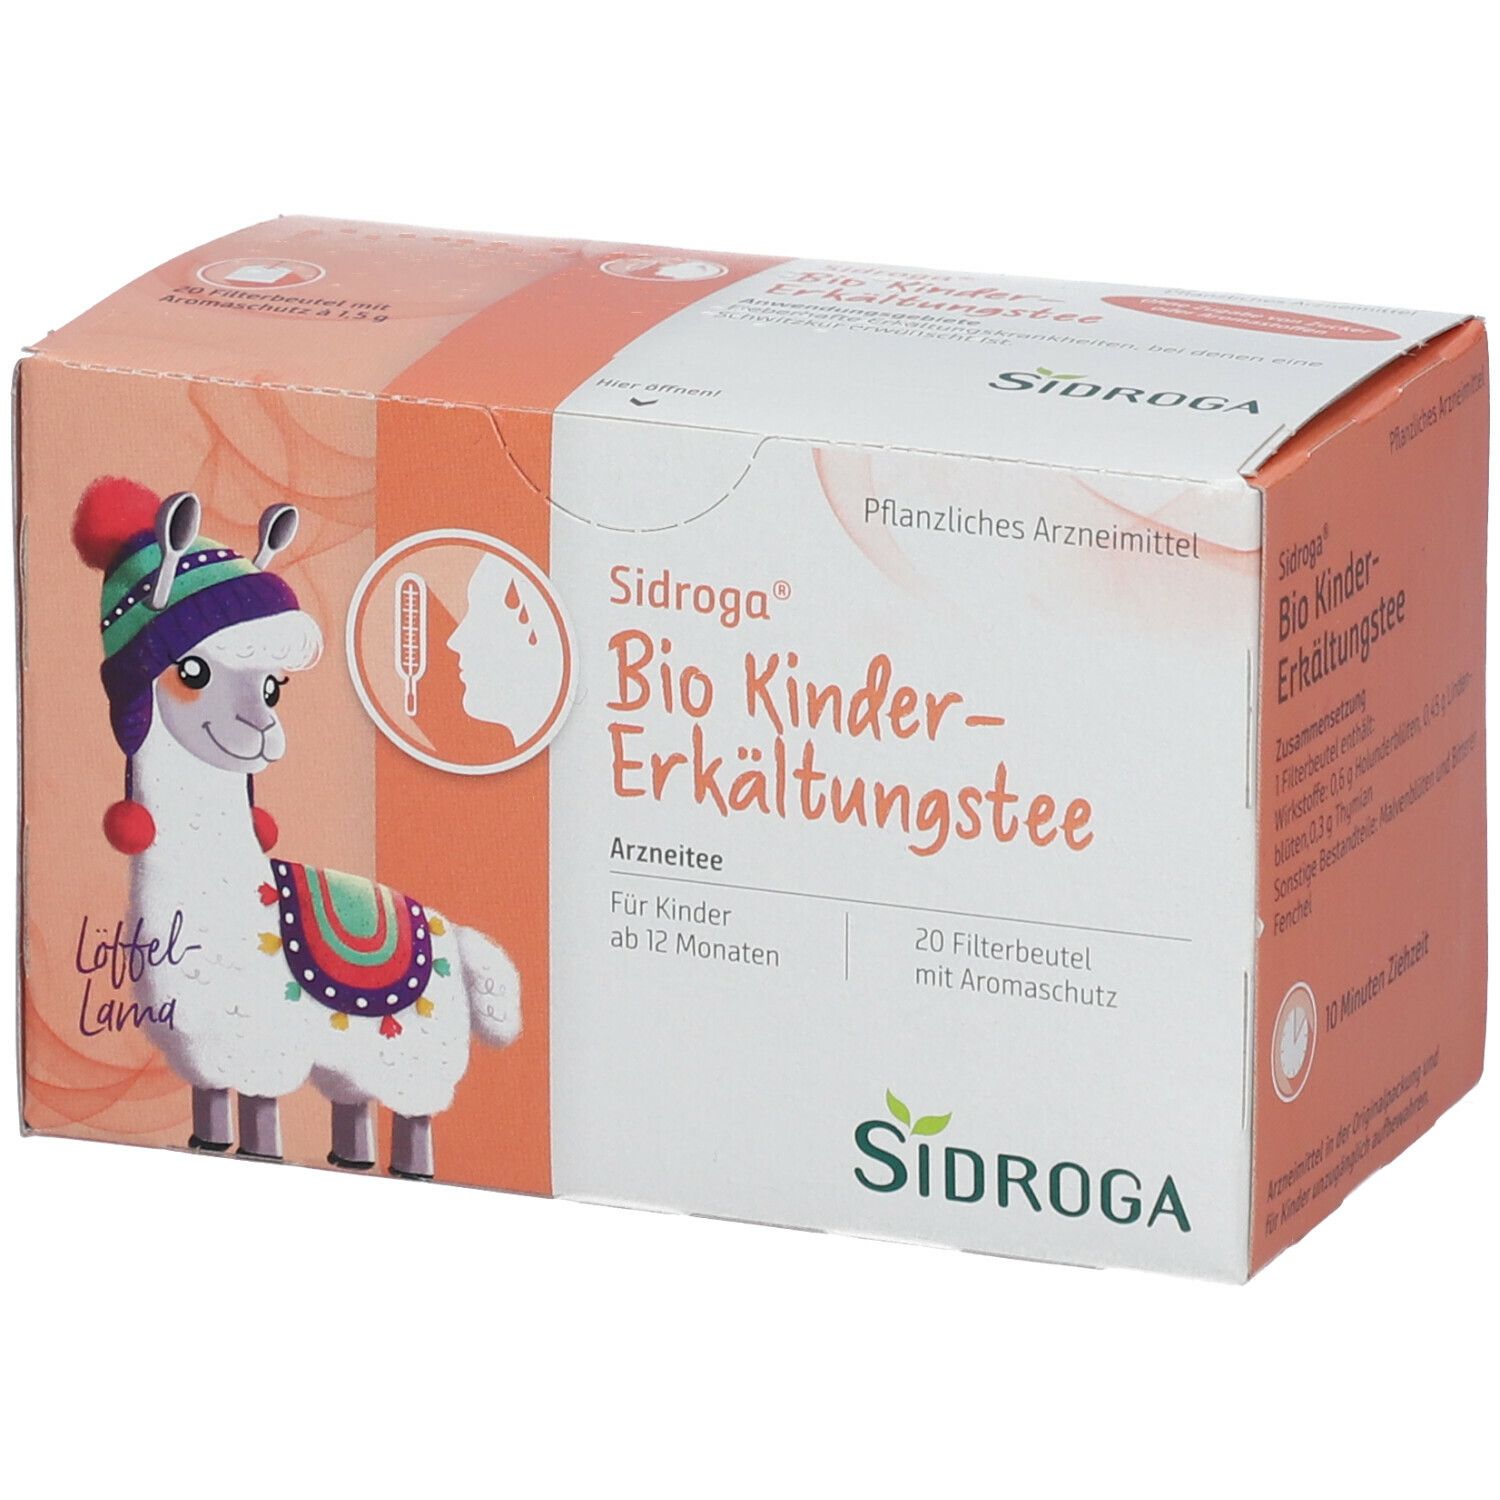 Sidroga® Bio Kinder Erkältungstee